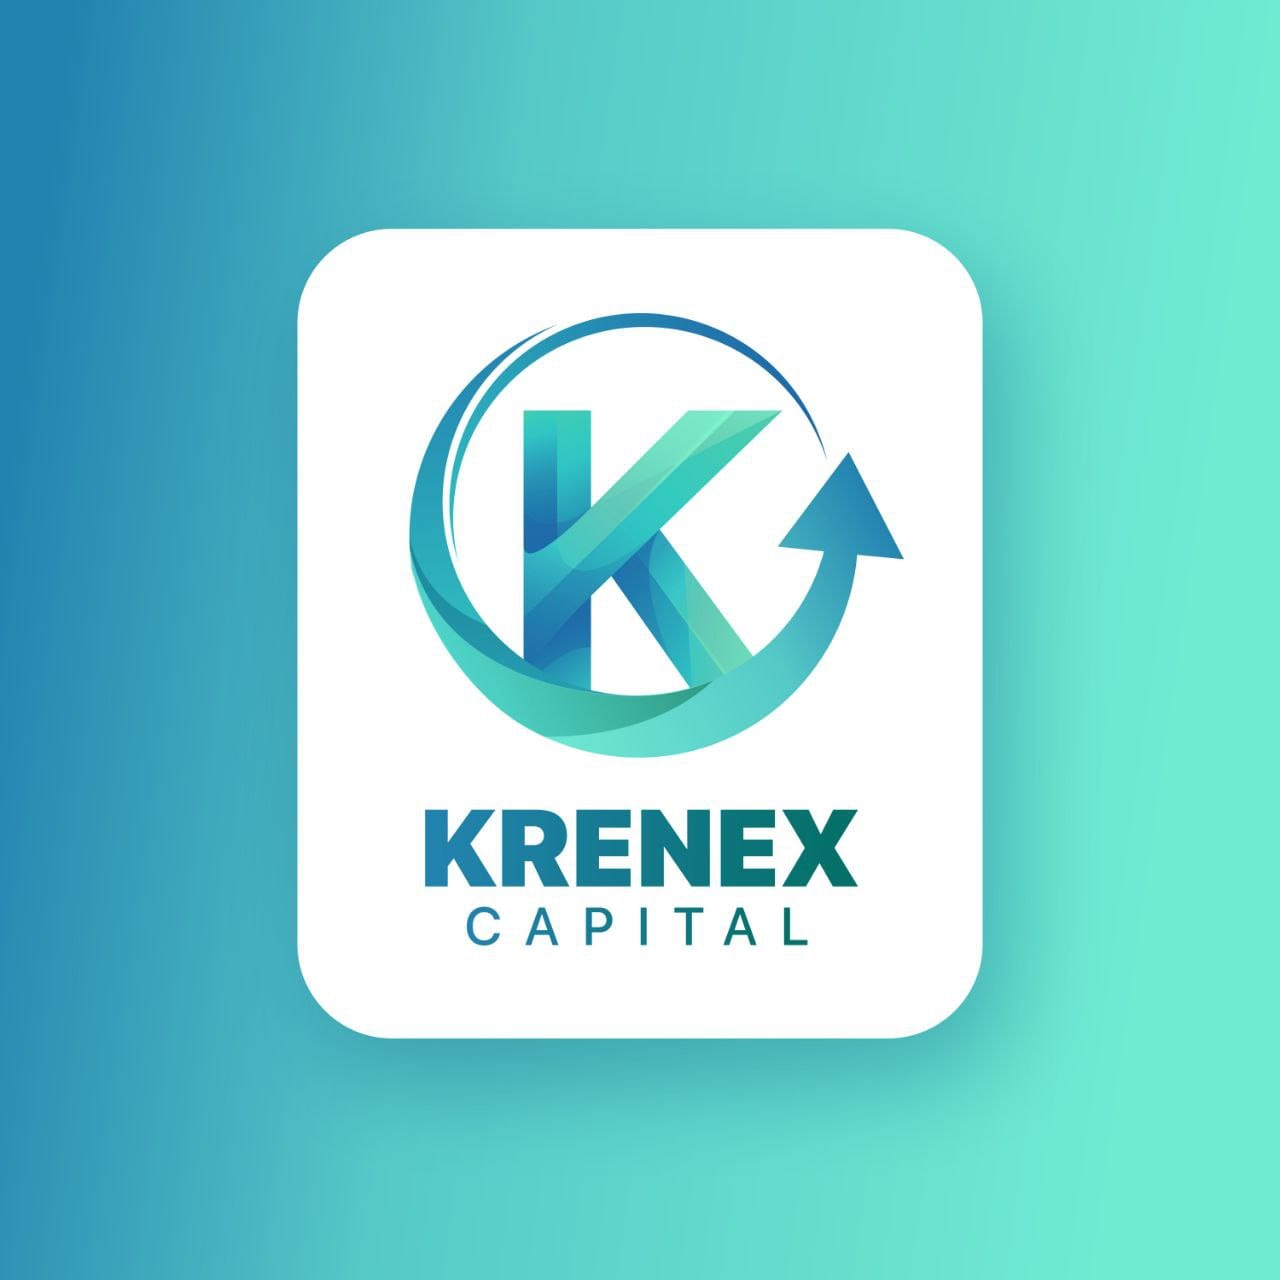 Krenex Capital